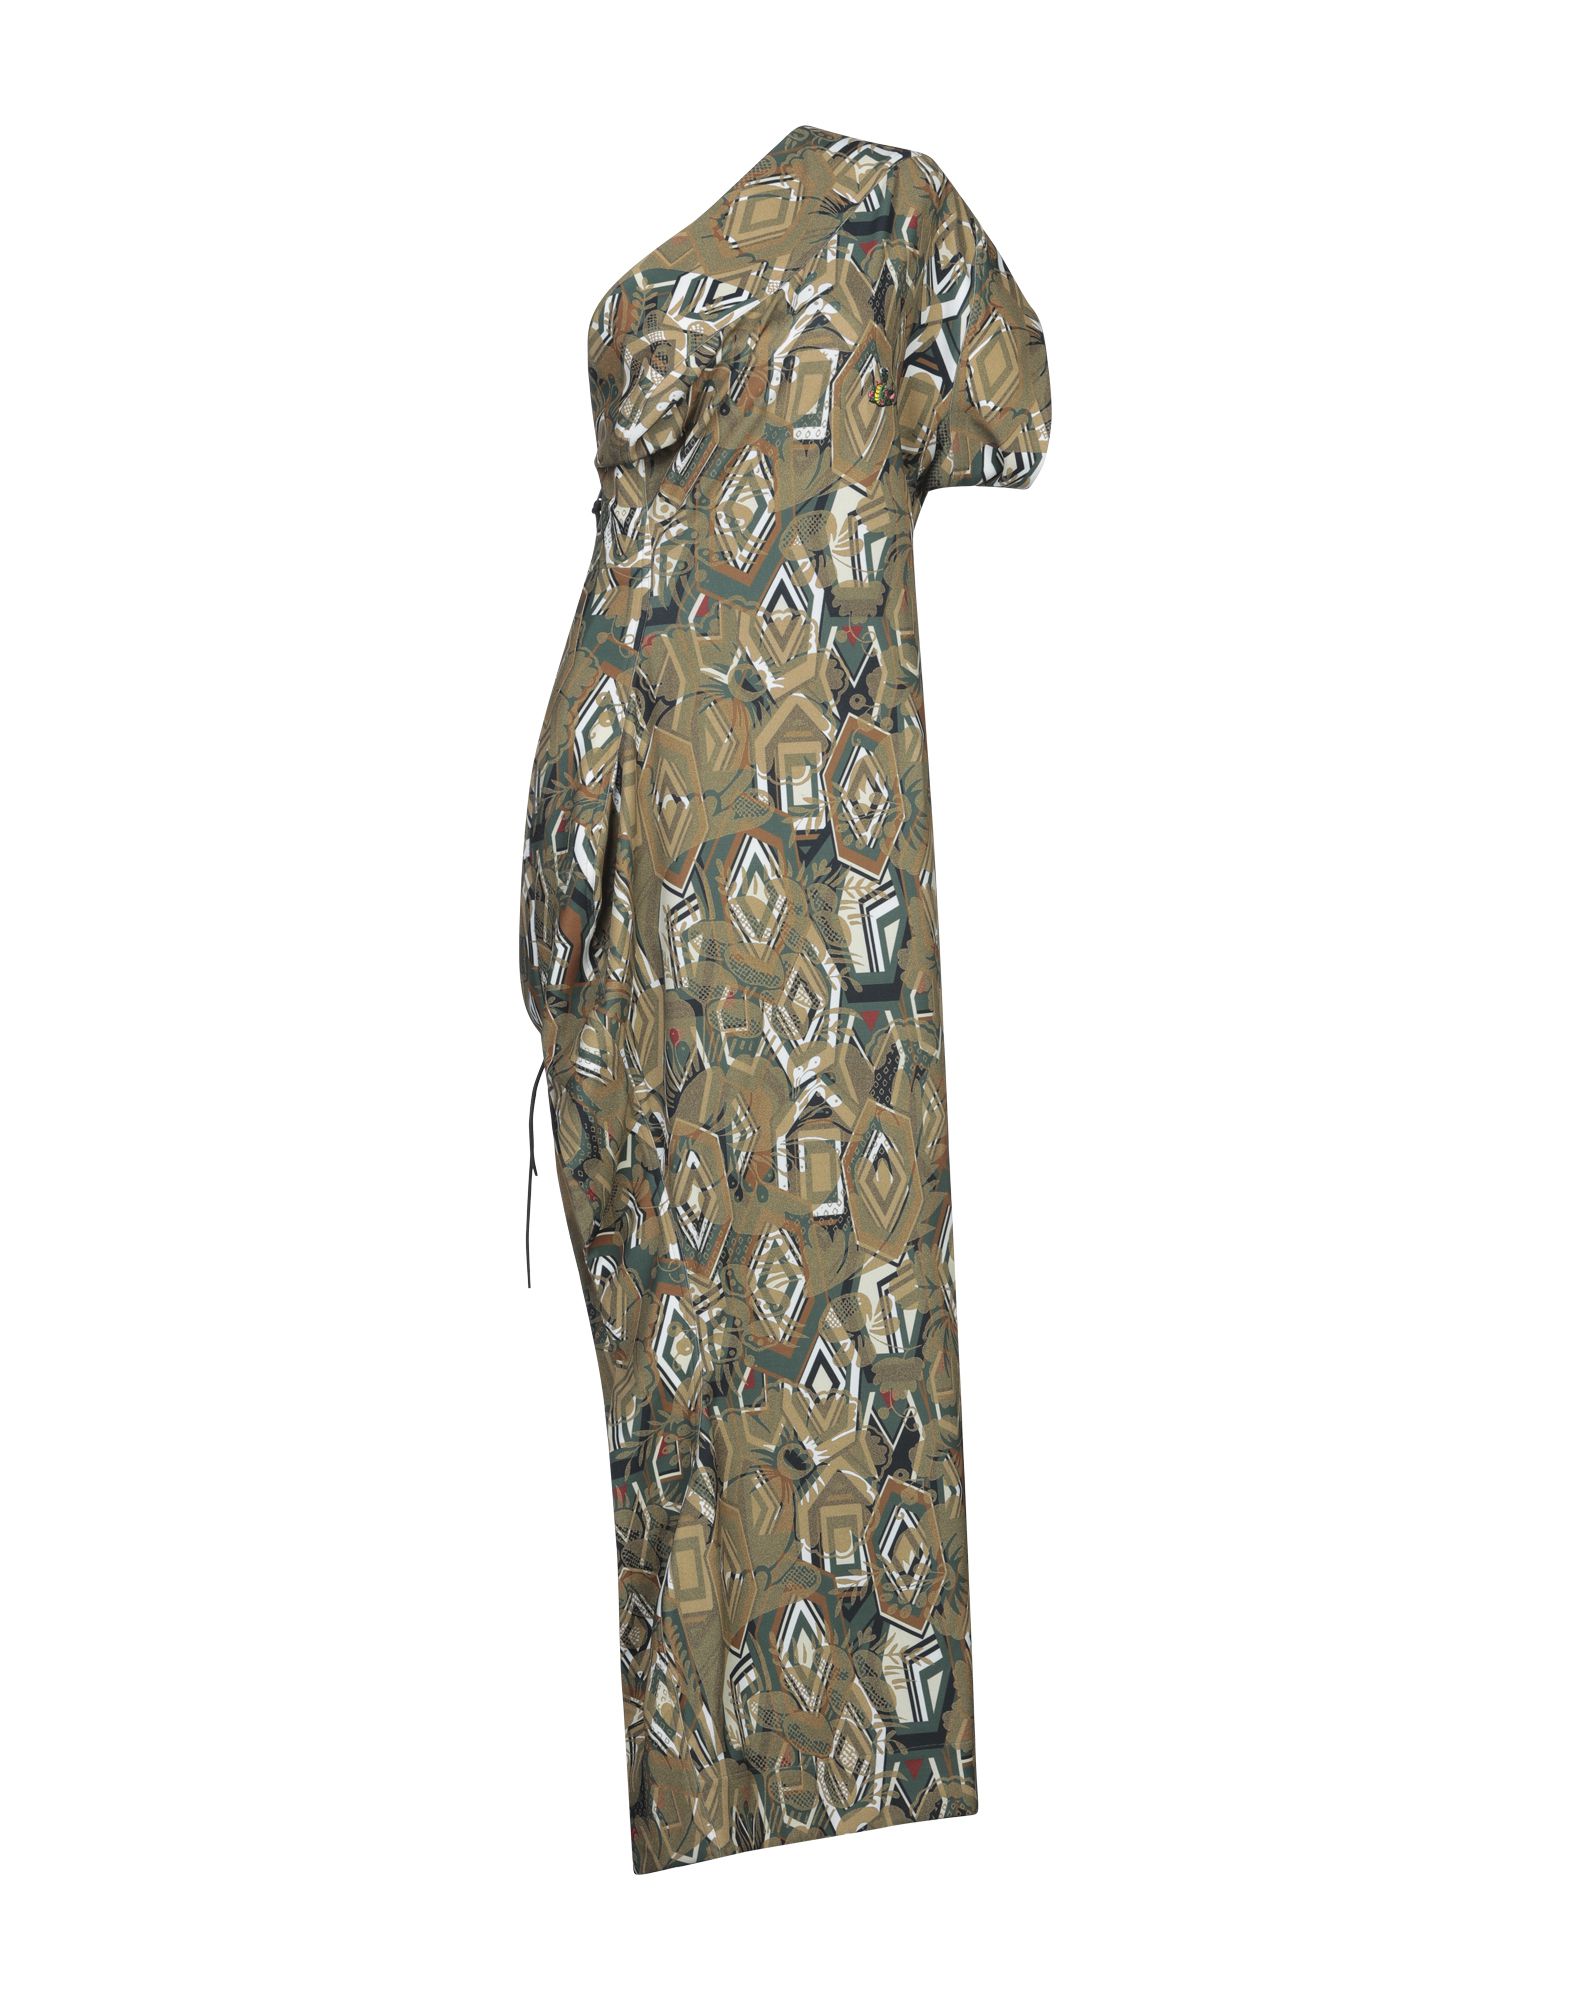 ANDREAS KRONTHALER x VIVIENNE WESTWOOD Платье длиной 3/4